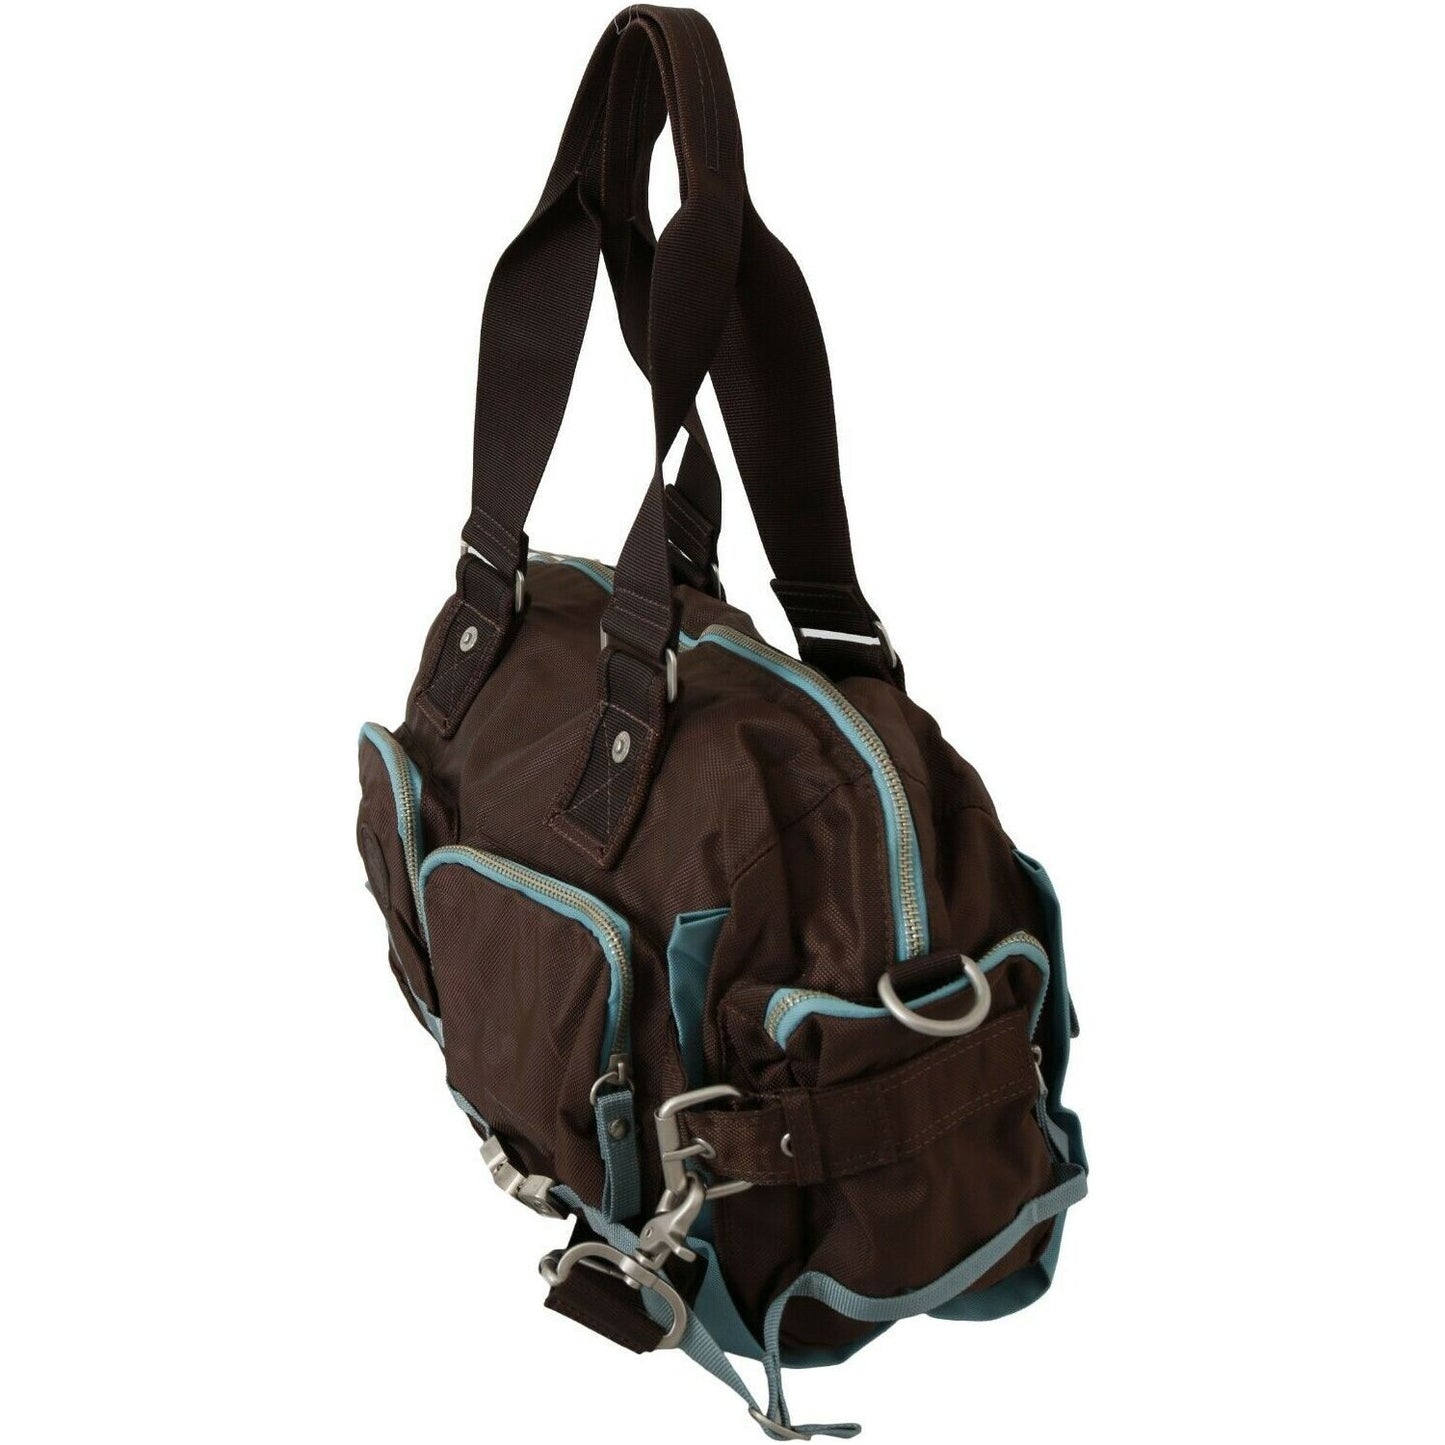 WAYFARER Elegant Duffel Travel Bag in Earthy Brown brown-handbag-duffel-travel-purse Luggage s-l1600-16-1-5c5c1e18-97e.jpg